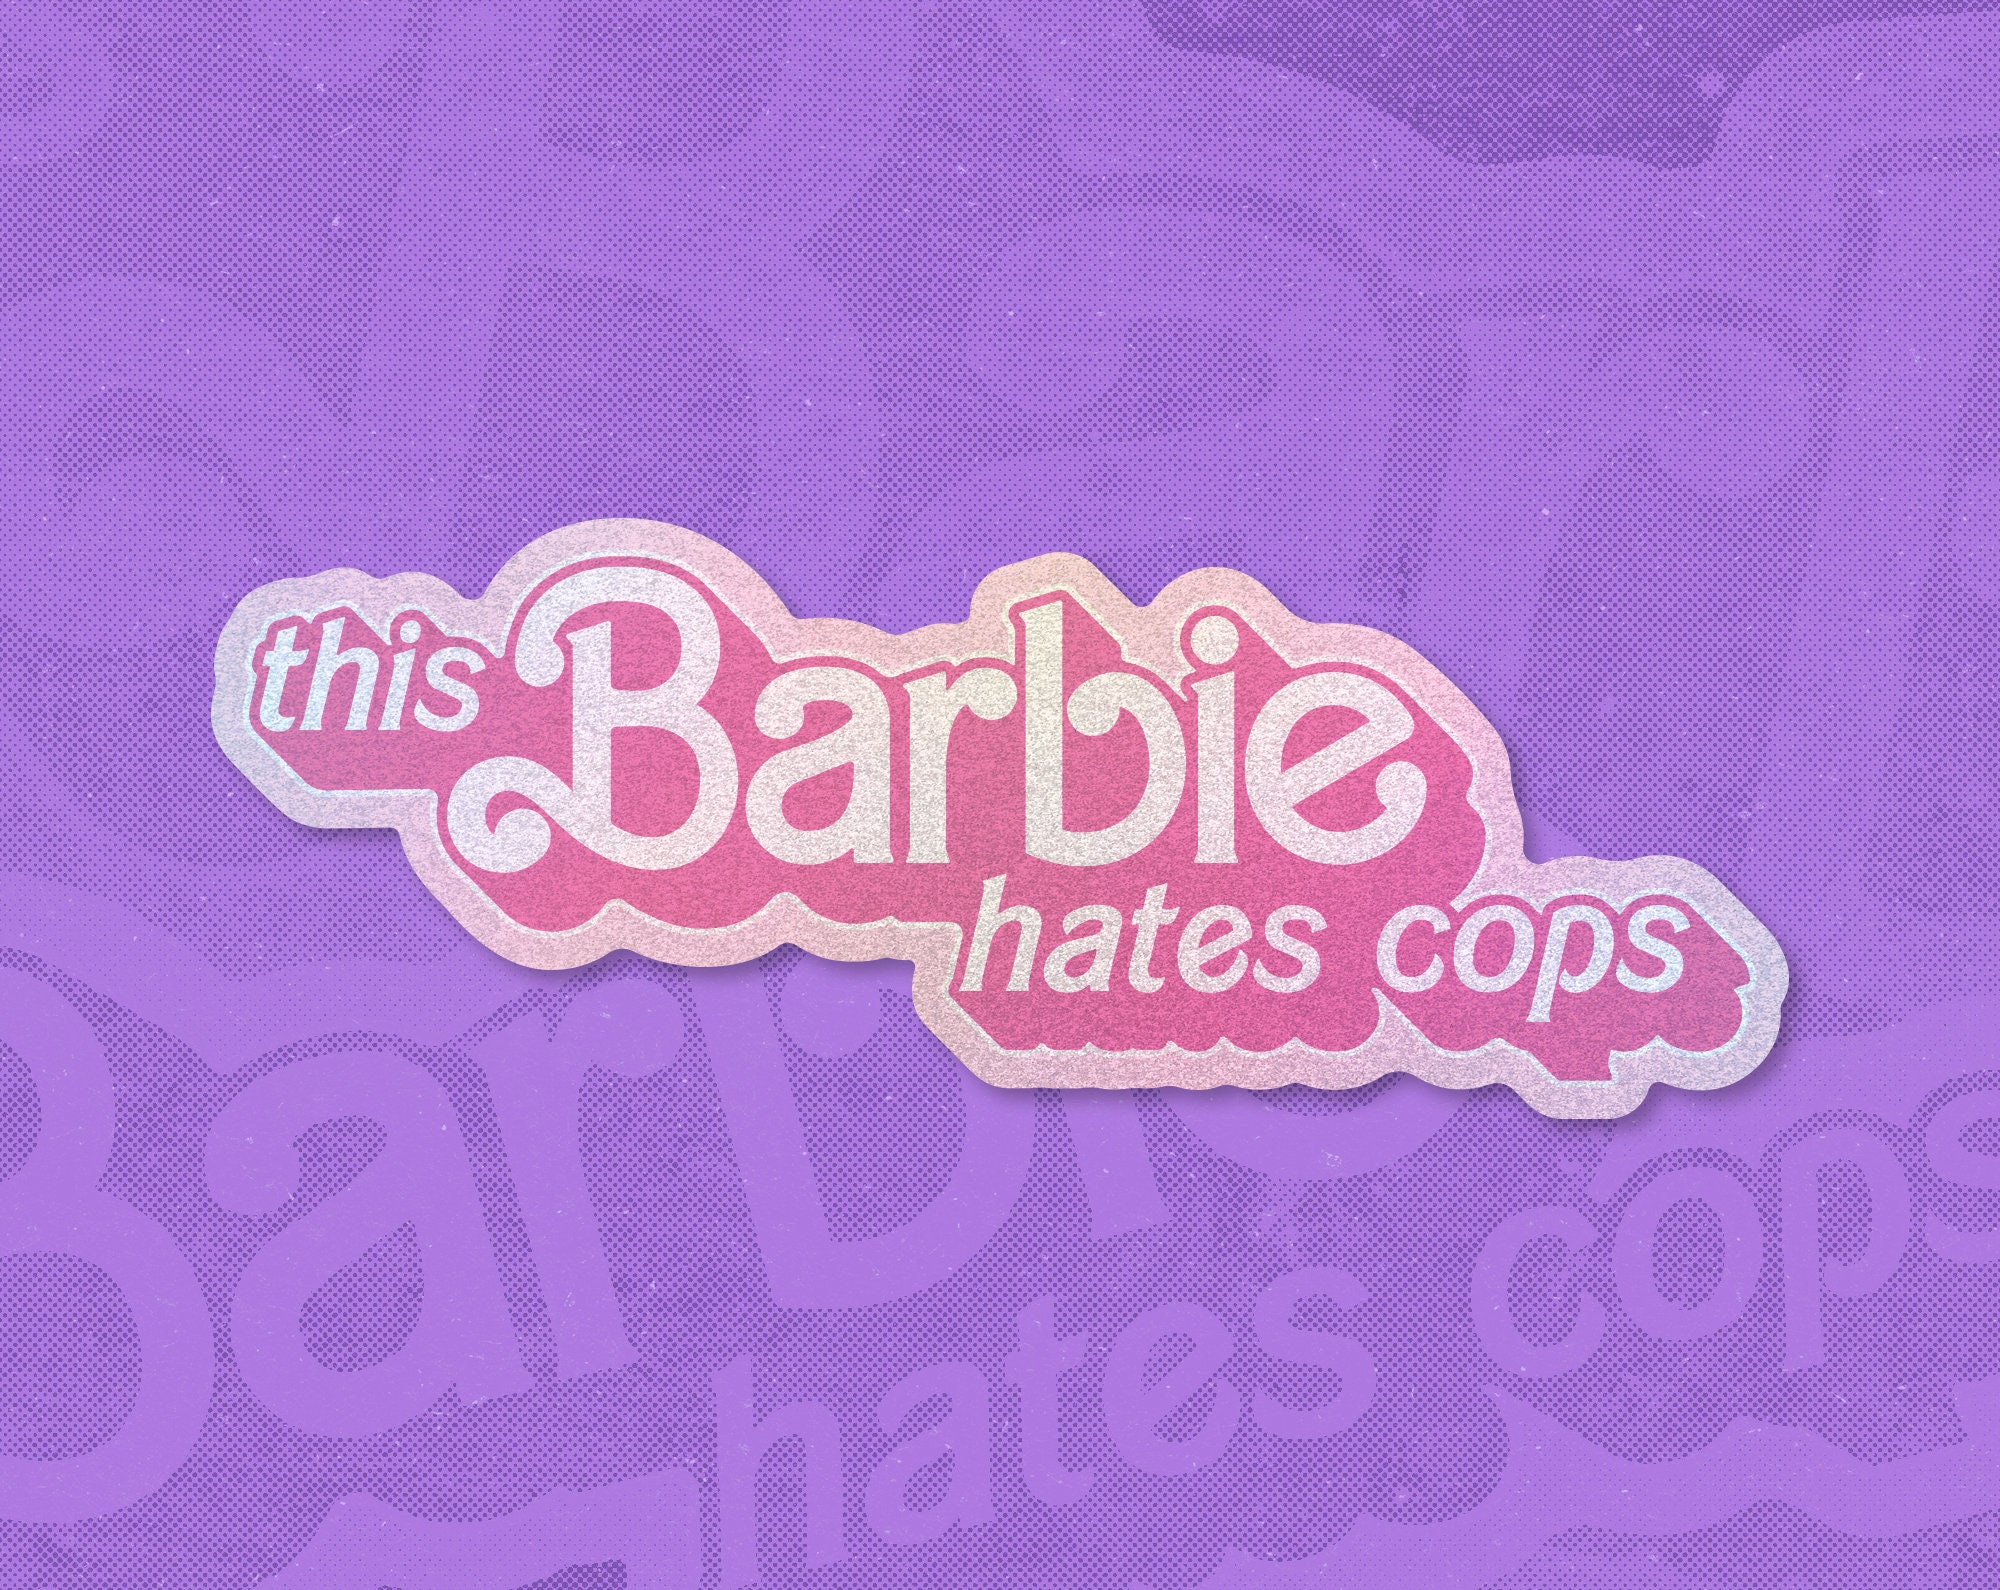 Hot Pink Barbie drink Sticker for Sale by sabinako